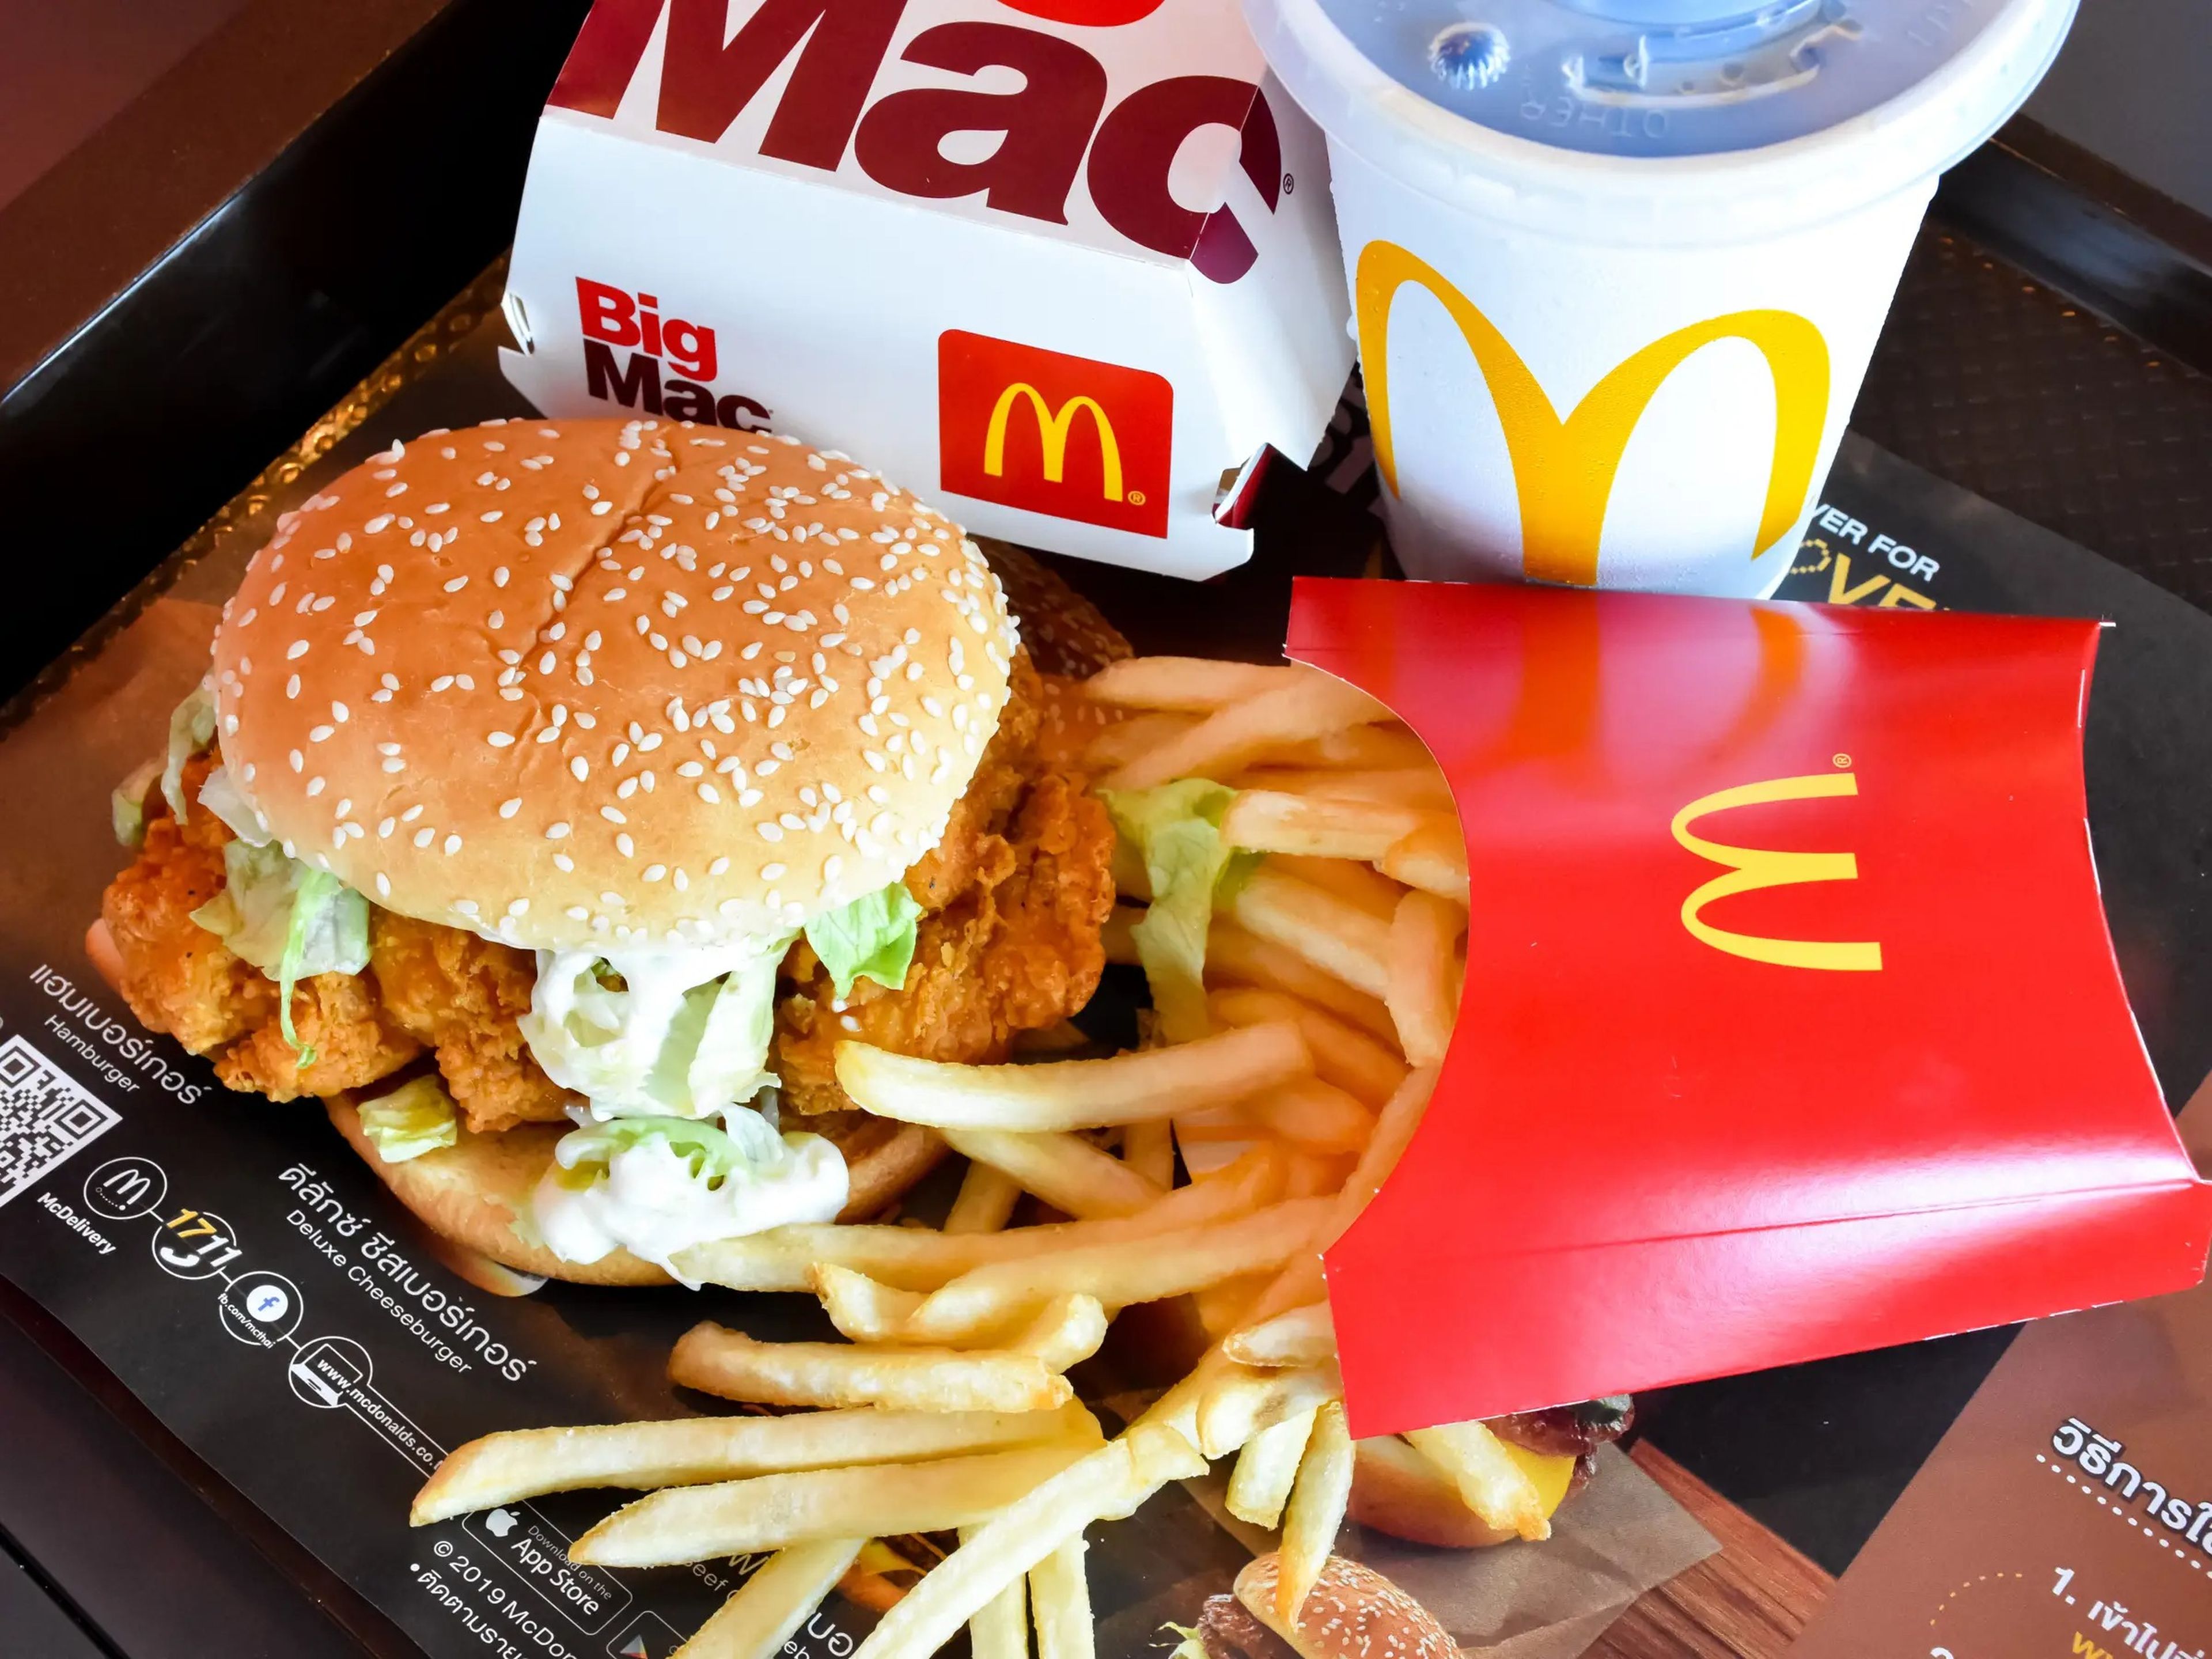 A chicken sandwich, french fries, a Big Mac box, and a soda on a tray.